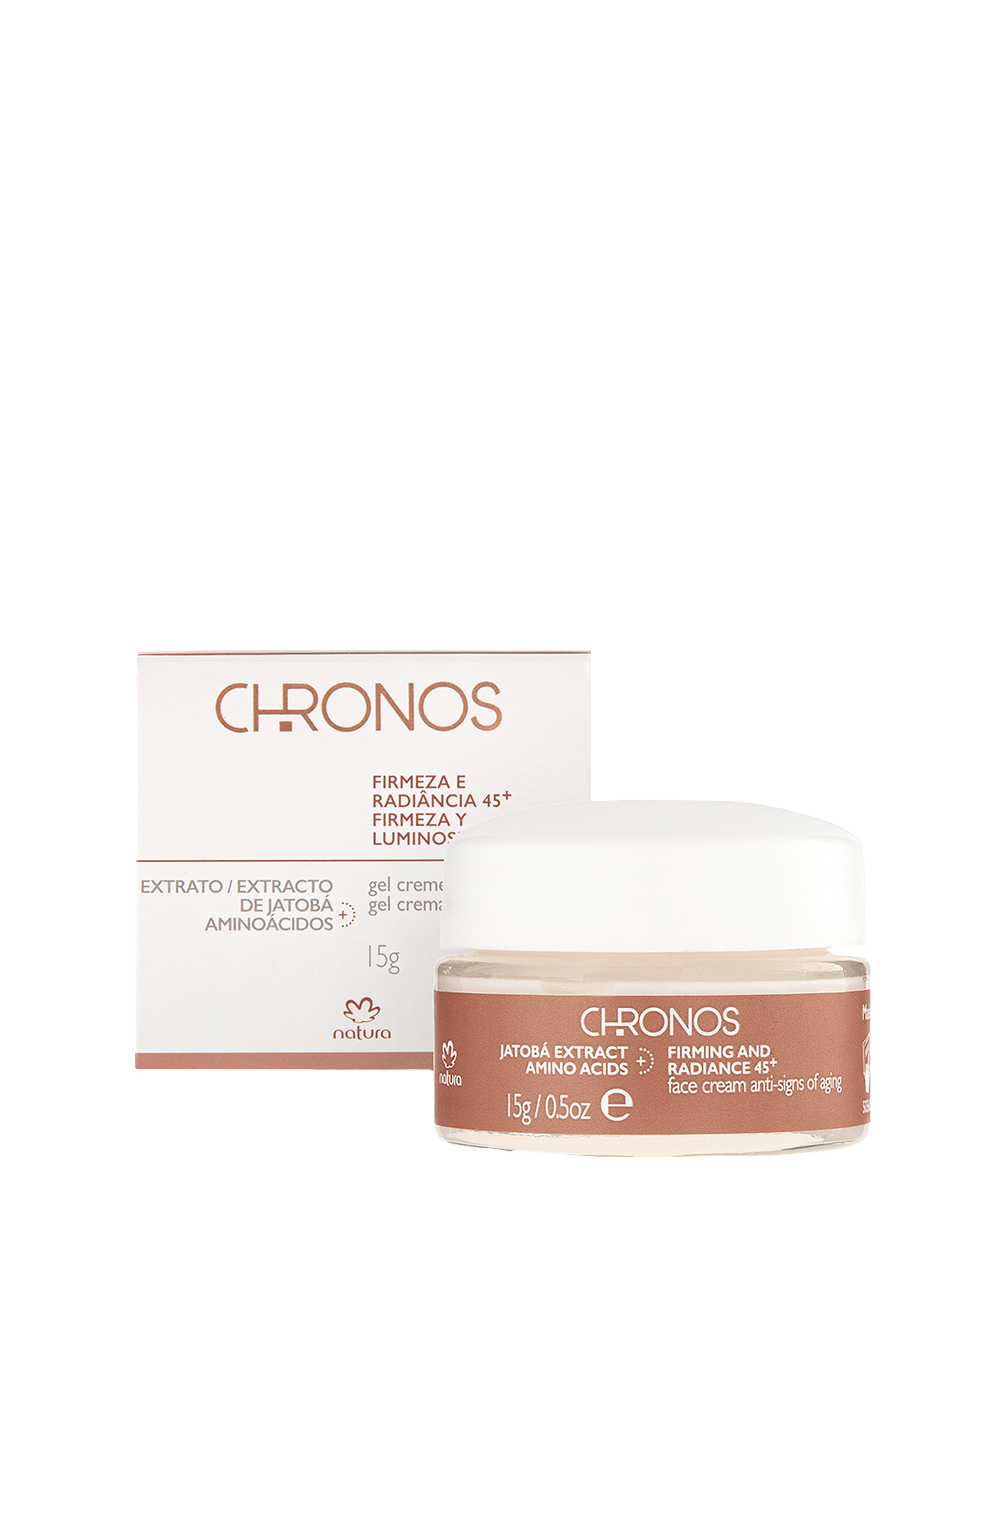 Chronos Firming & Radiance Face Cream 45+ Deluxe Sample 15g - Natura